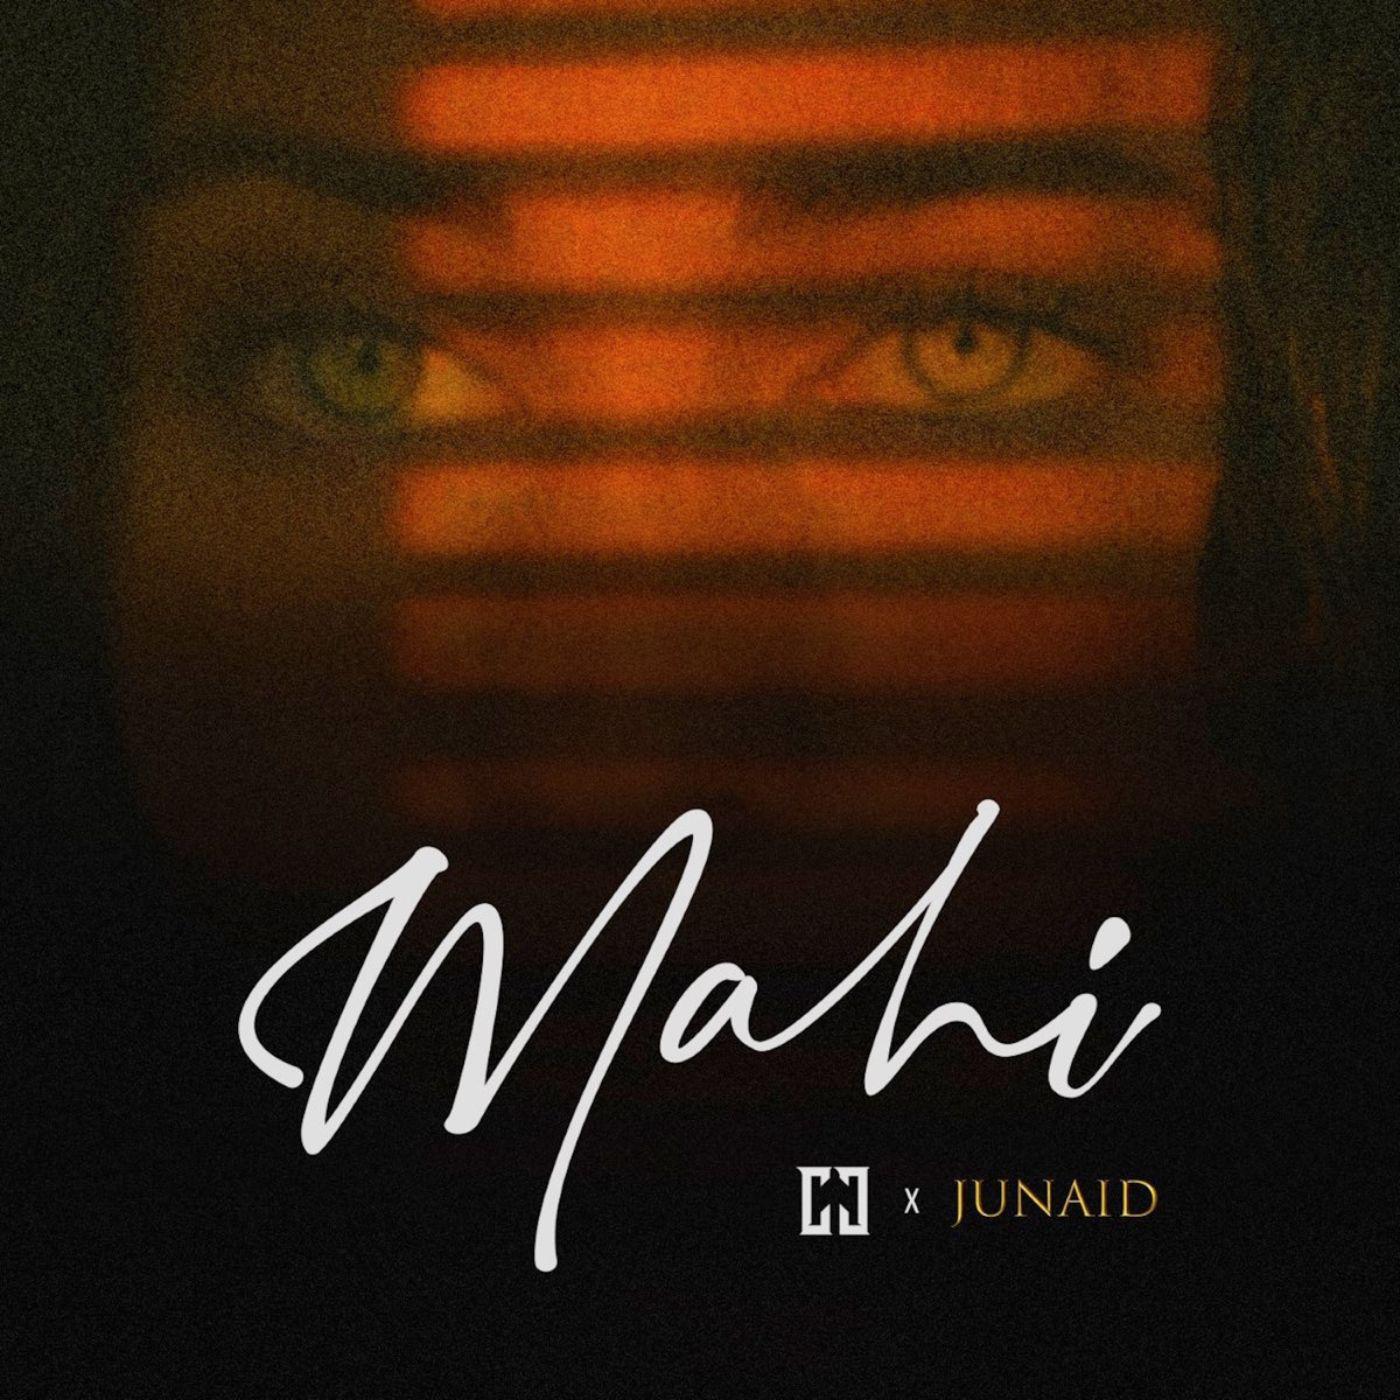 Постер альбома Mahi